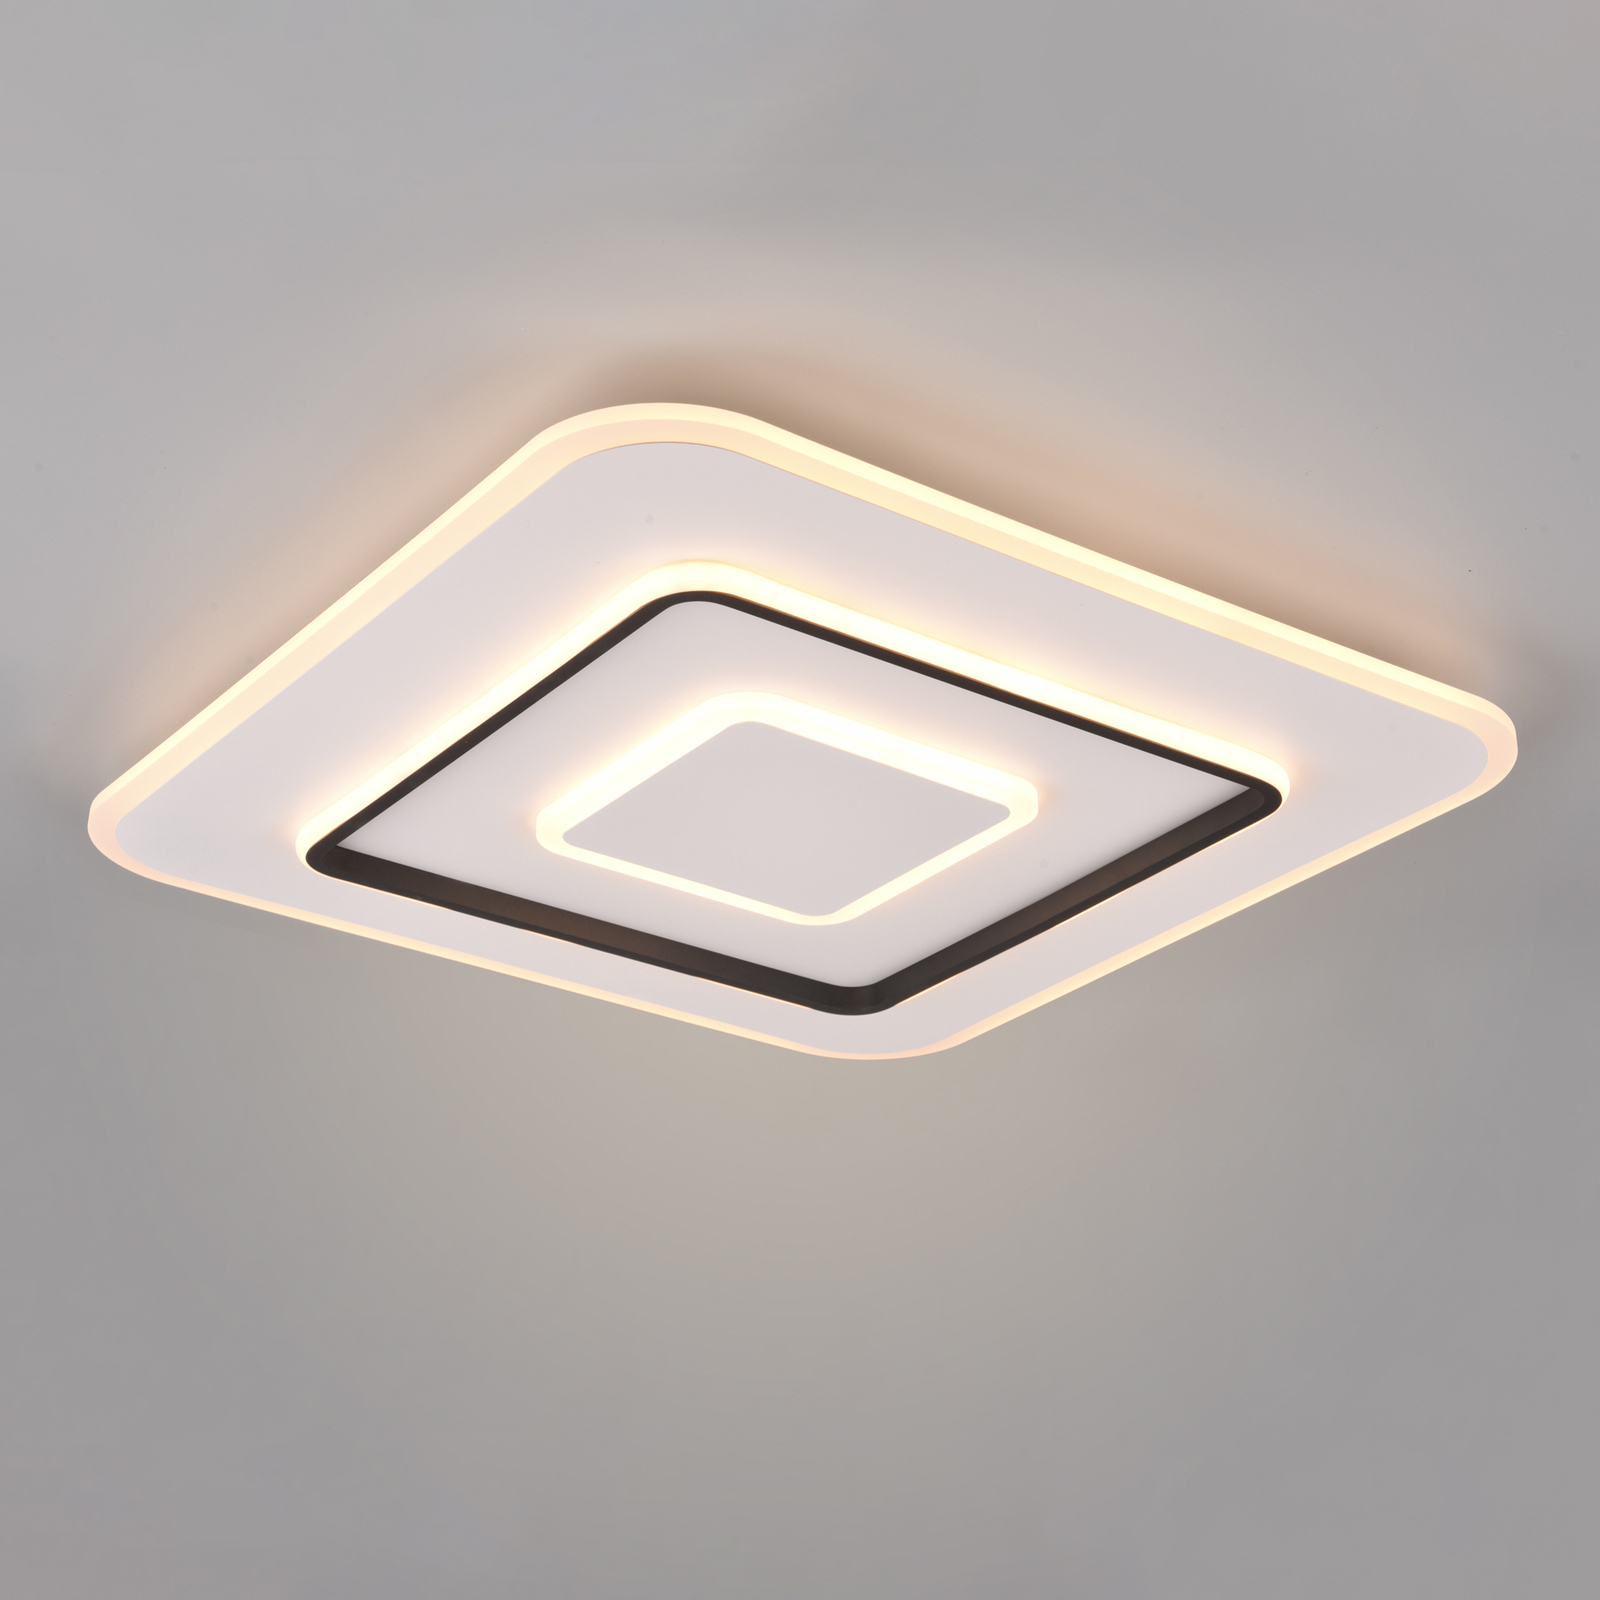 LED plafondlamp Jora hoekig, 60 x 60 cm